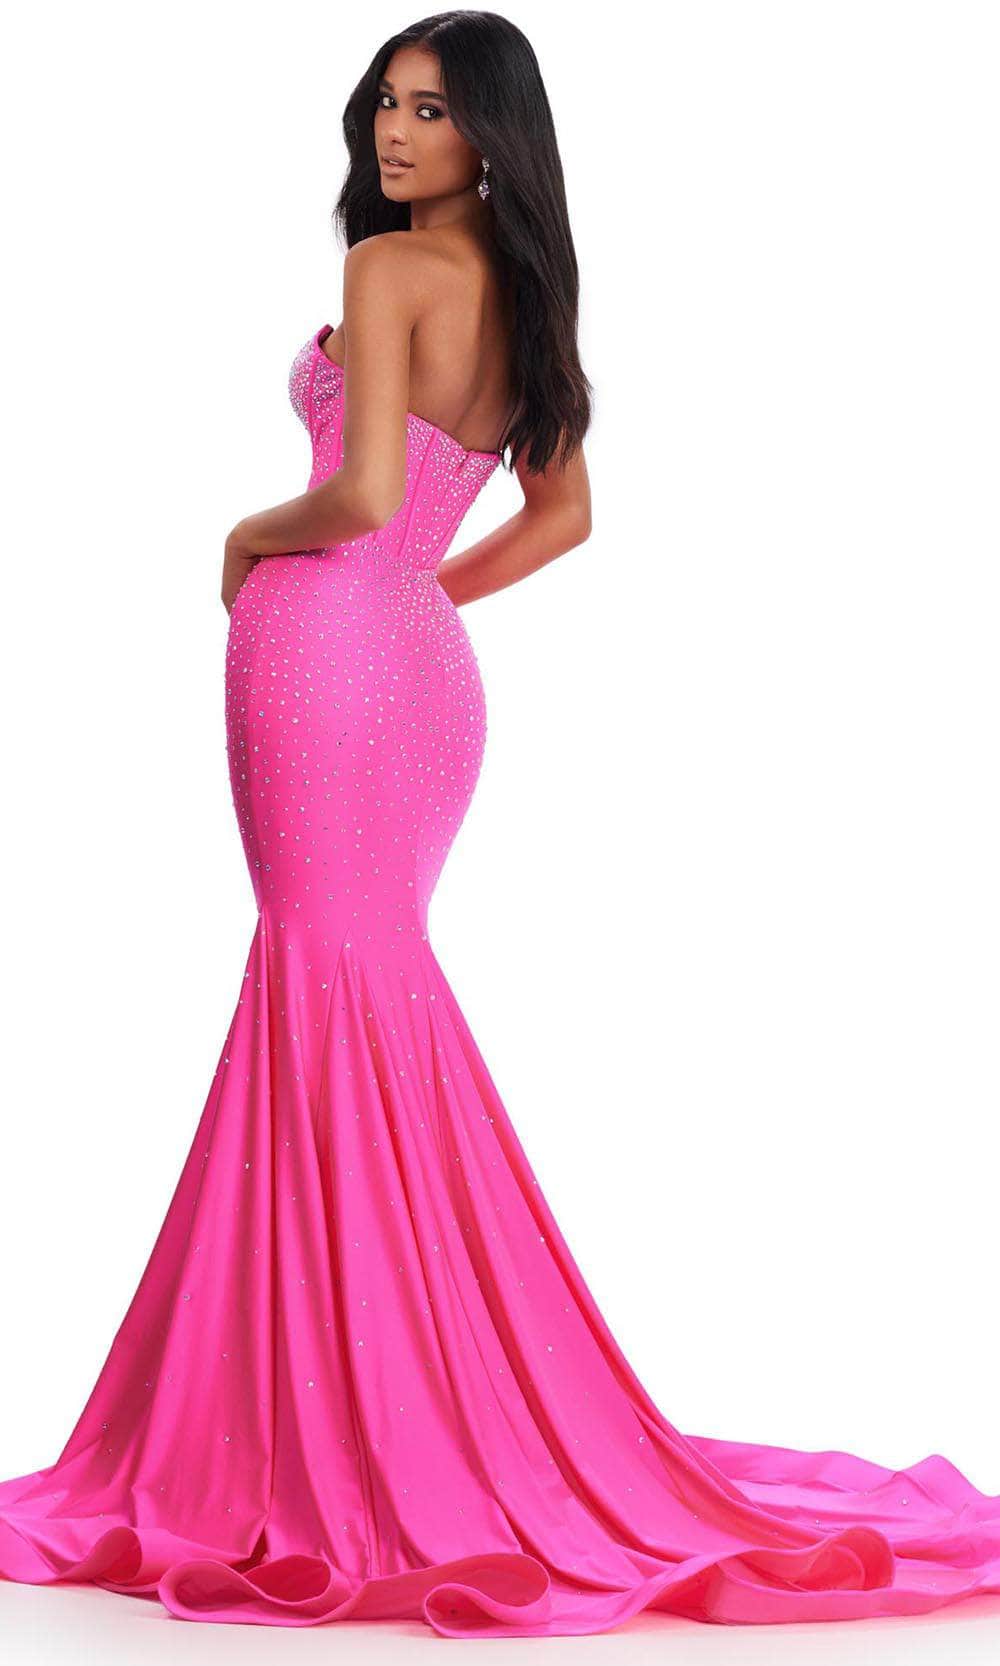 Ashley Lauren 11560 - Strapless Mermaid Evening Gown Evening Dresses